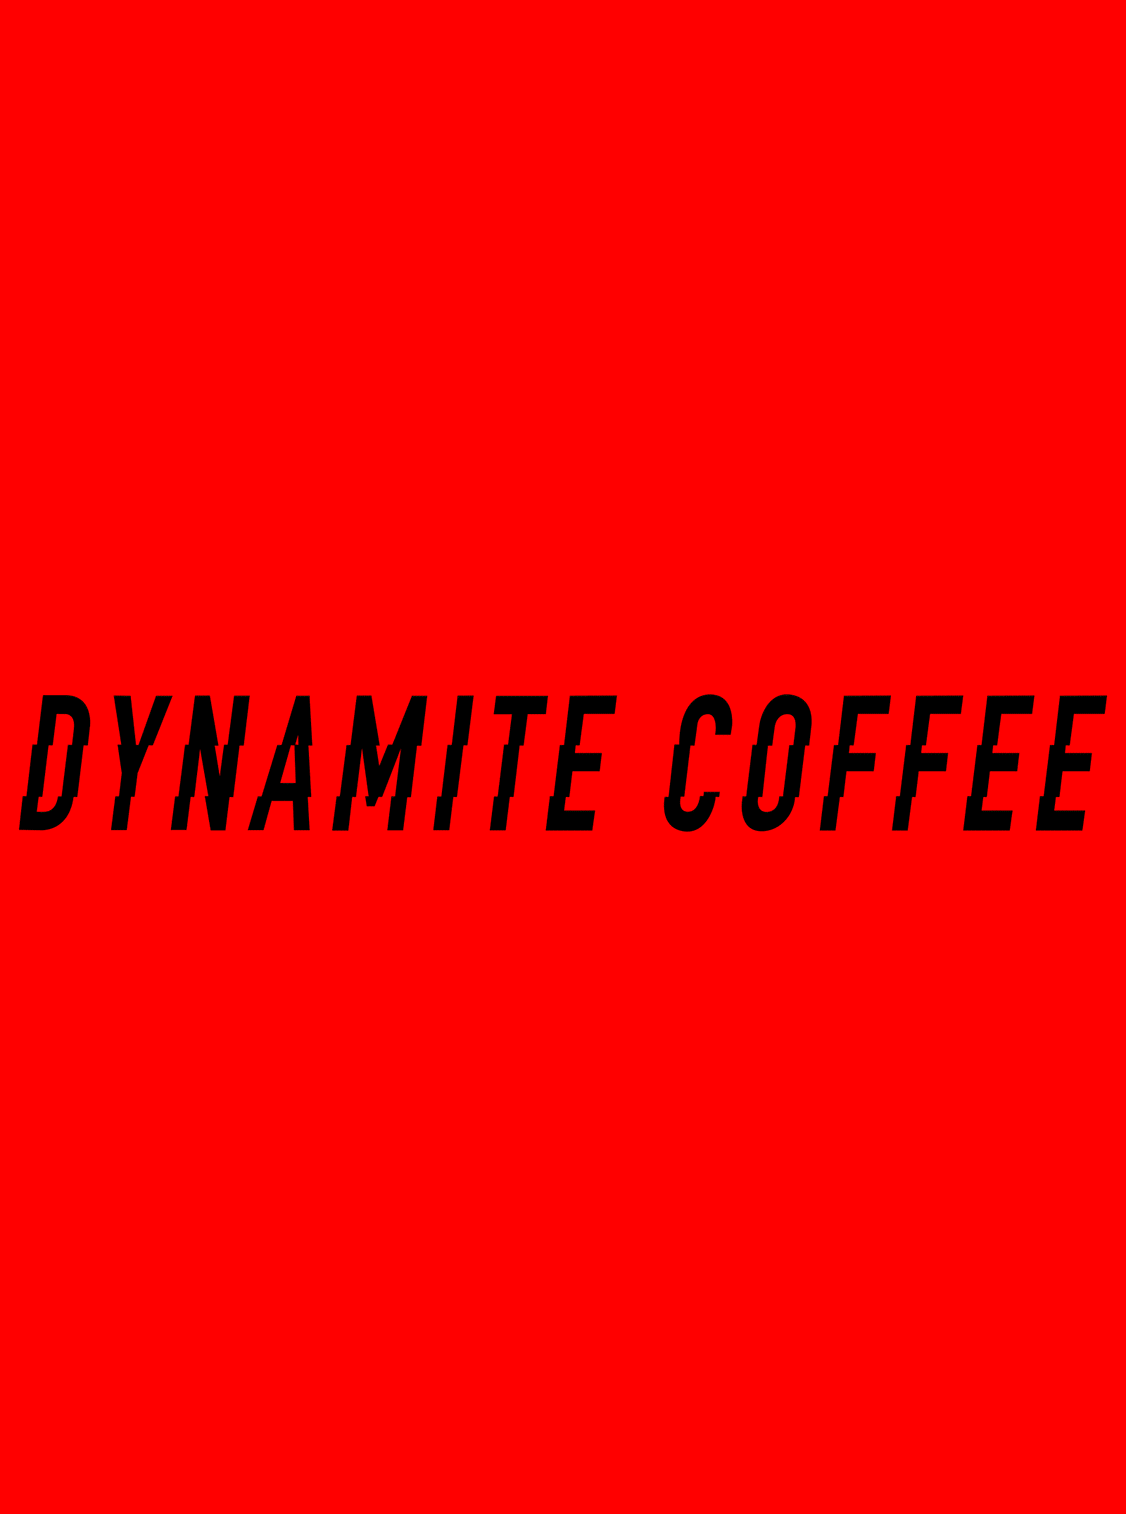 dynamite-explosion